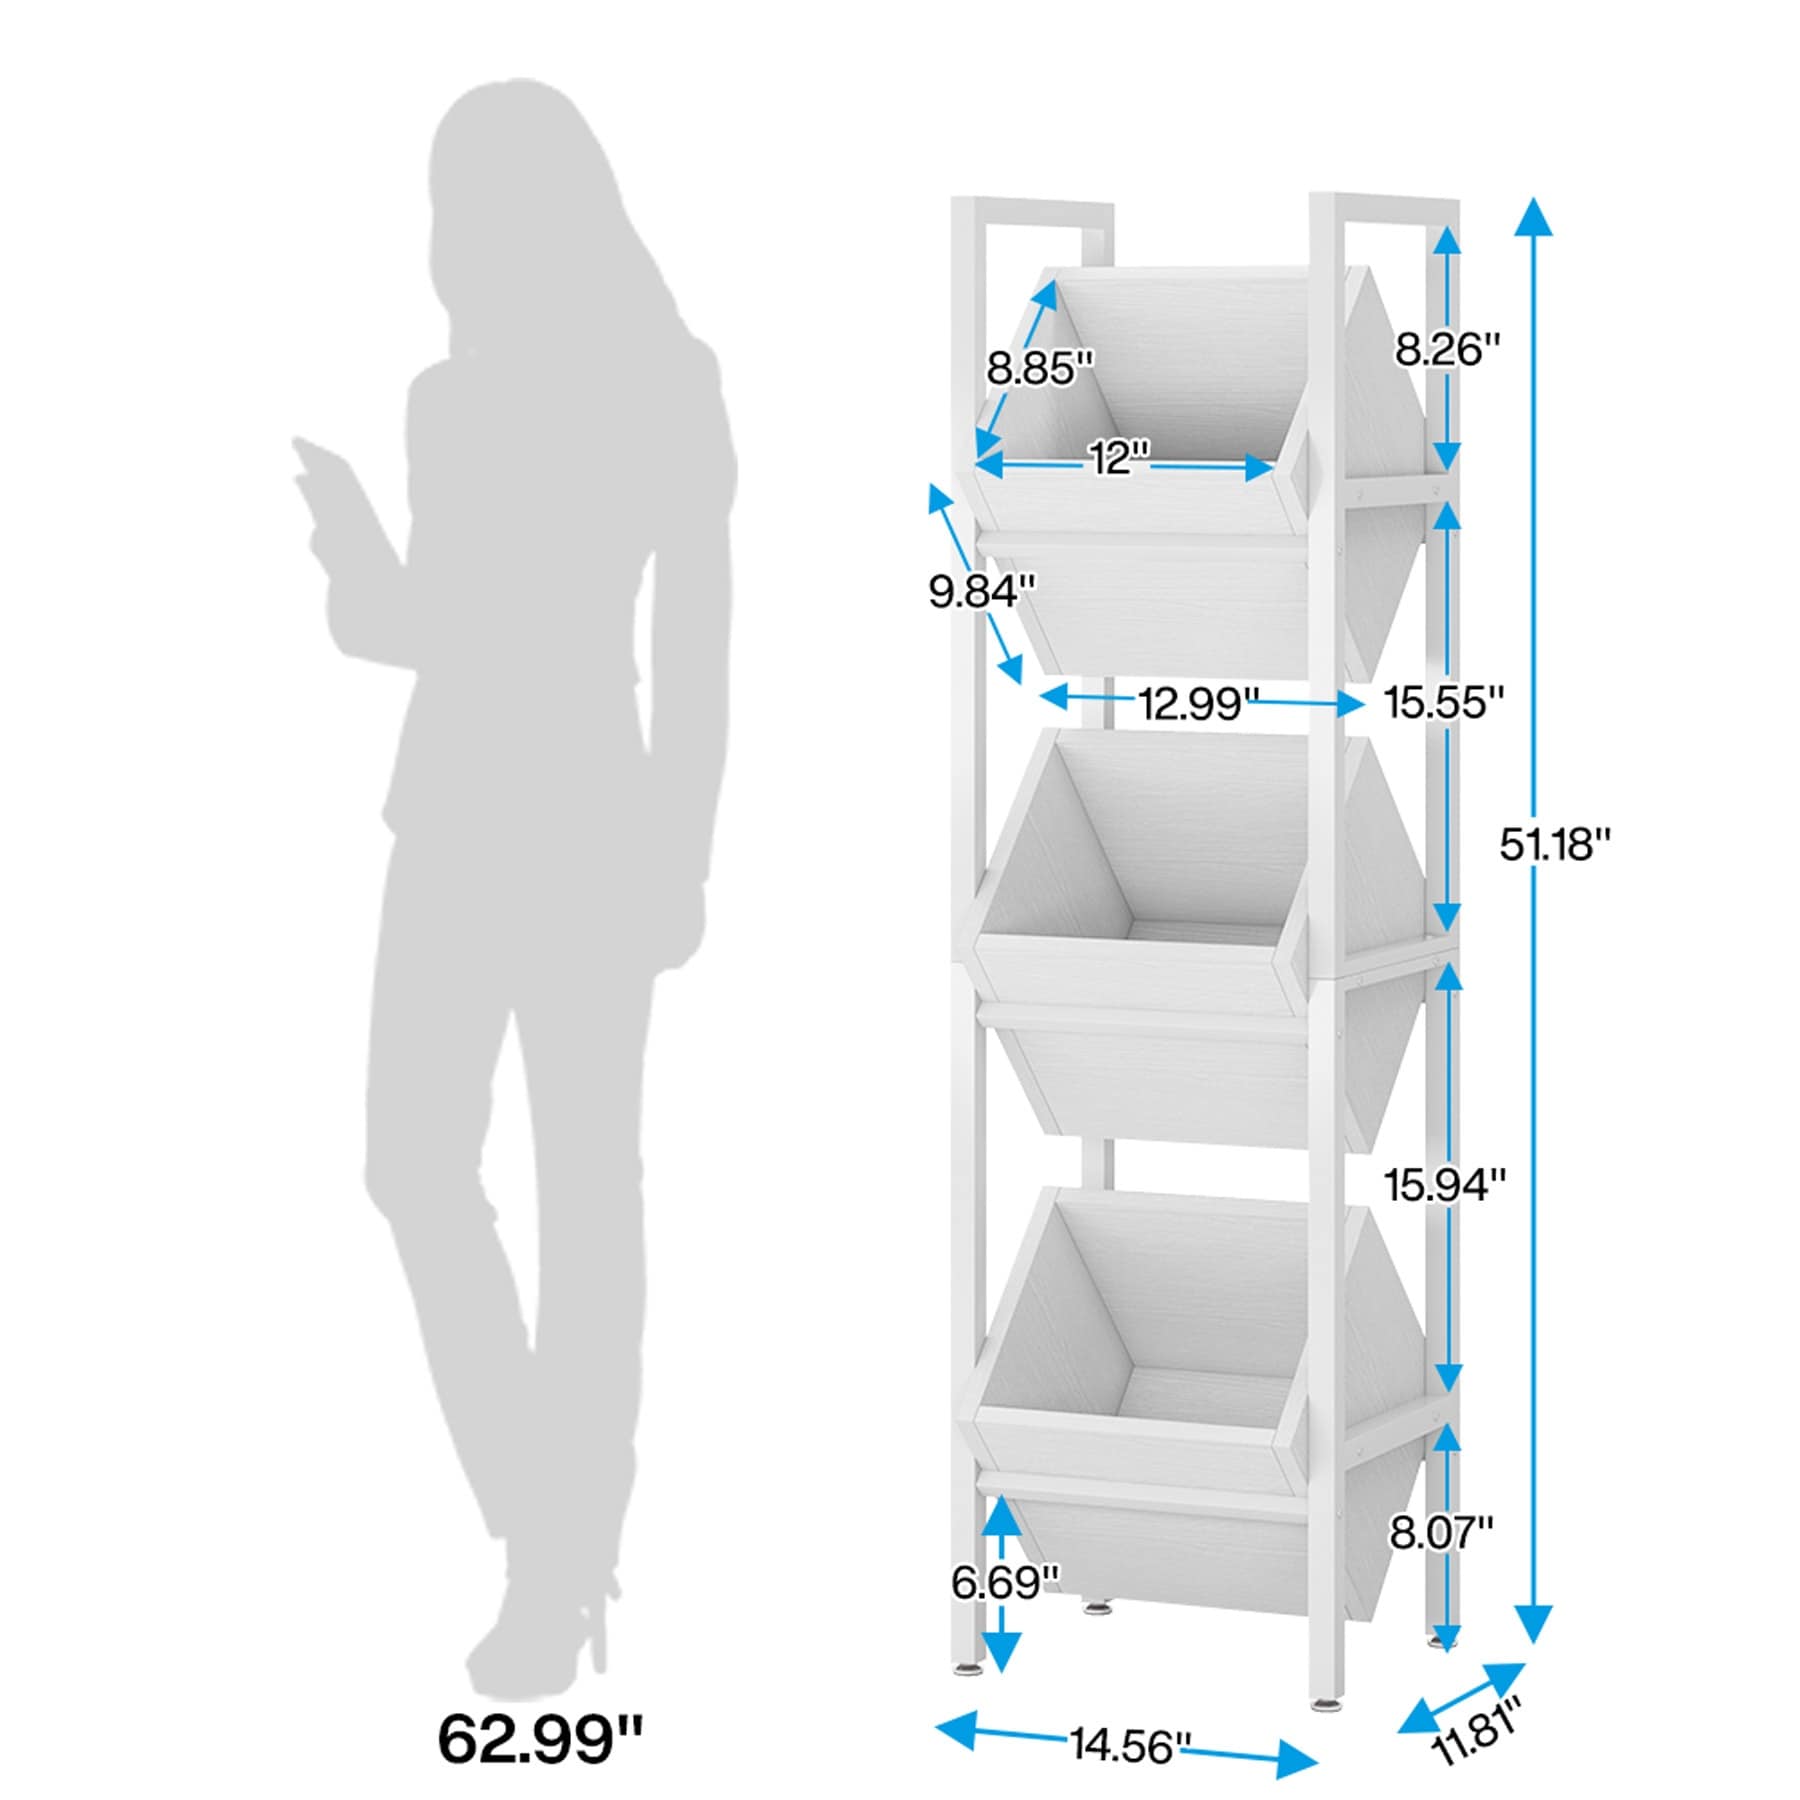 Vertical Standing Basket Storage Tower for Kitchen Bathroom Living Room -  On Sale - Bed Bath & Beyond - 35926360